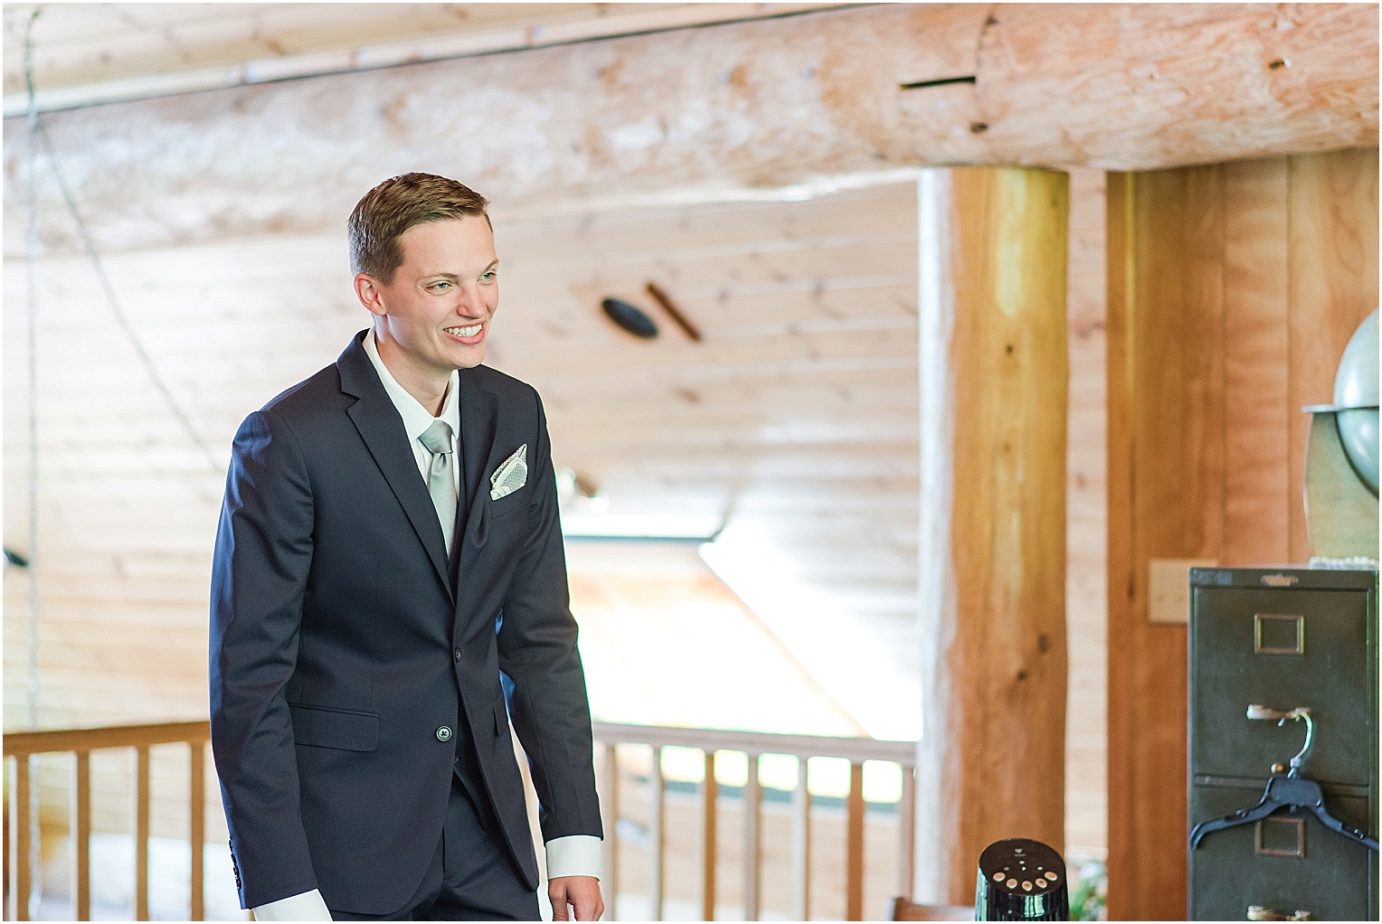 DIY backyard onalaska wedding Onalaska Photographer Bryan and Olivia groom's first look